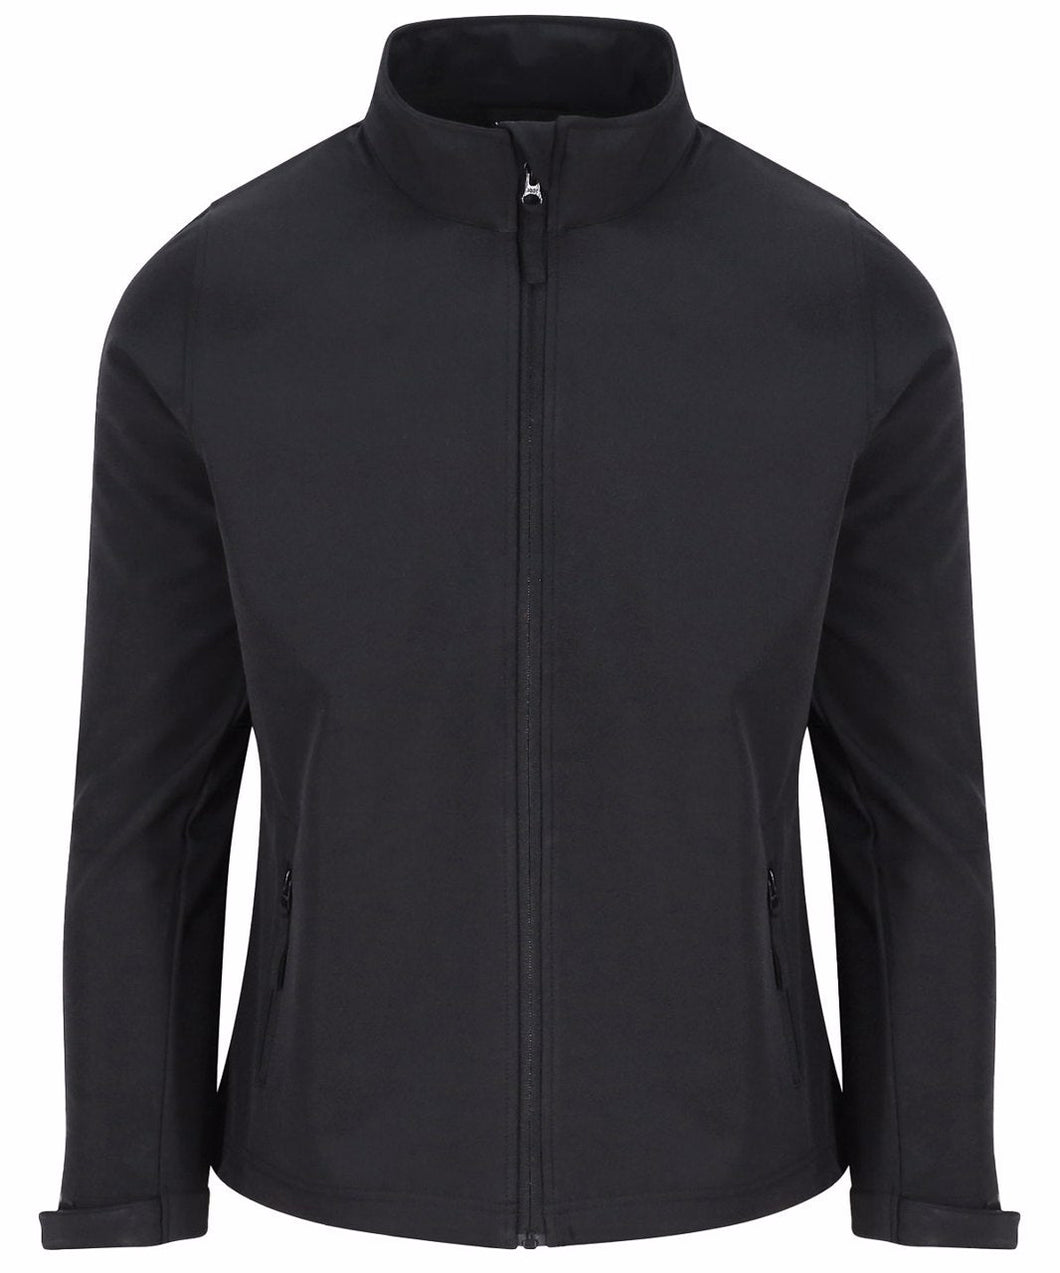 RX50F - Women's Pro 2-layer softshell jacket Gazelle Sports UK Small Black NO